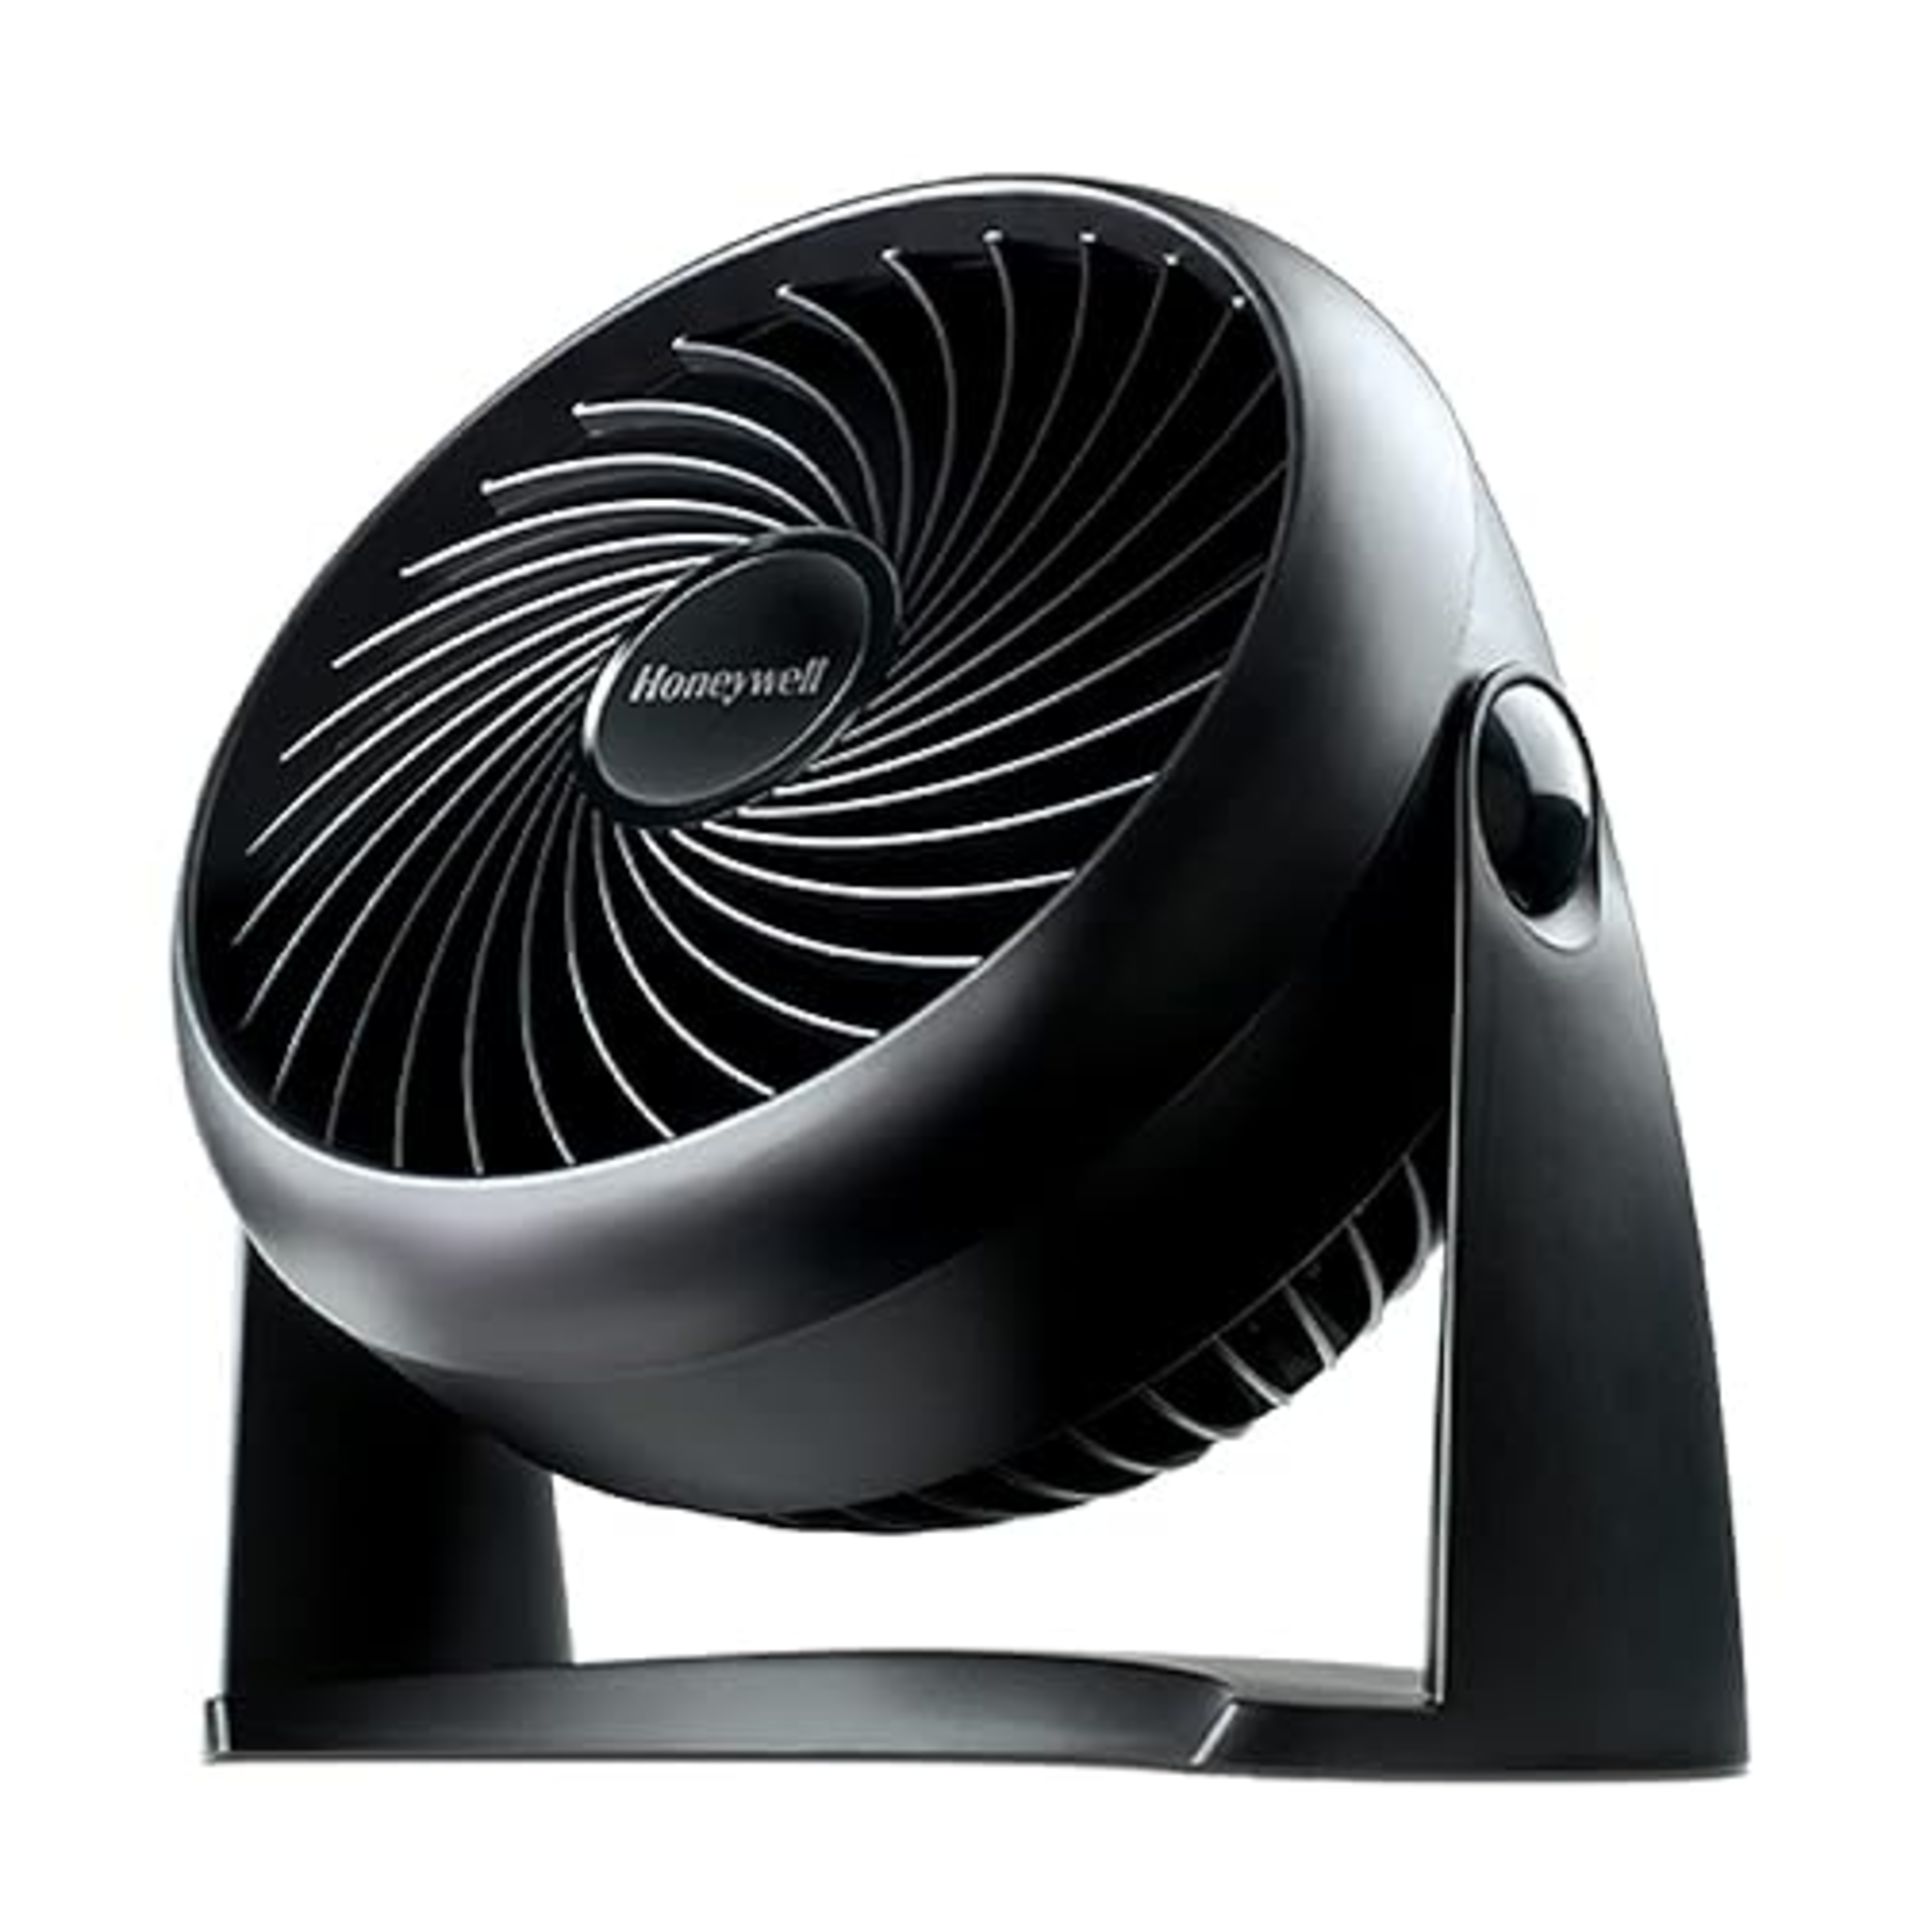 Honeywell Turboforce Power Fan (Quiet Operation Cooling, 90° Variable Tilt, 3 Speed Settings,...